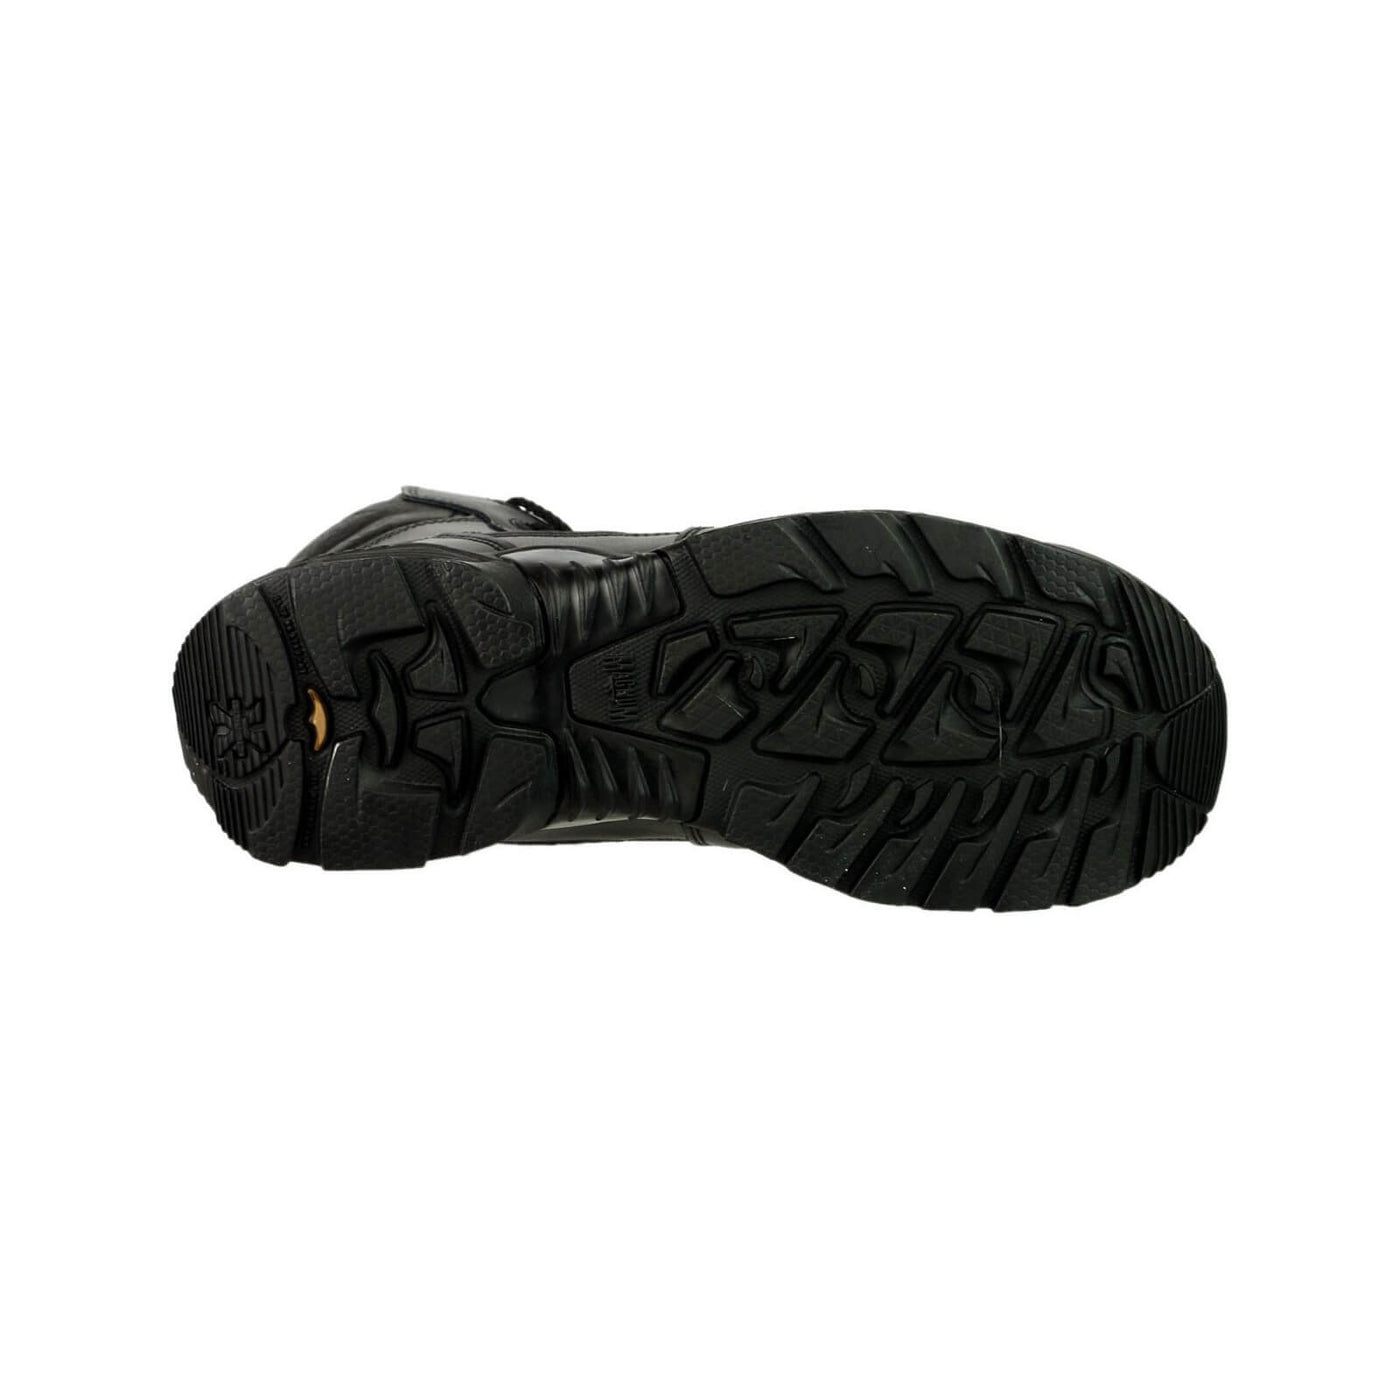 Magnum Stealth Force 6.0 S3 Safety Boots Black 4#colour_black